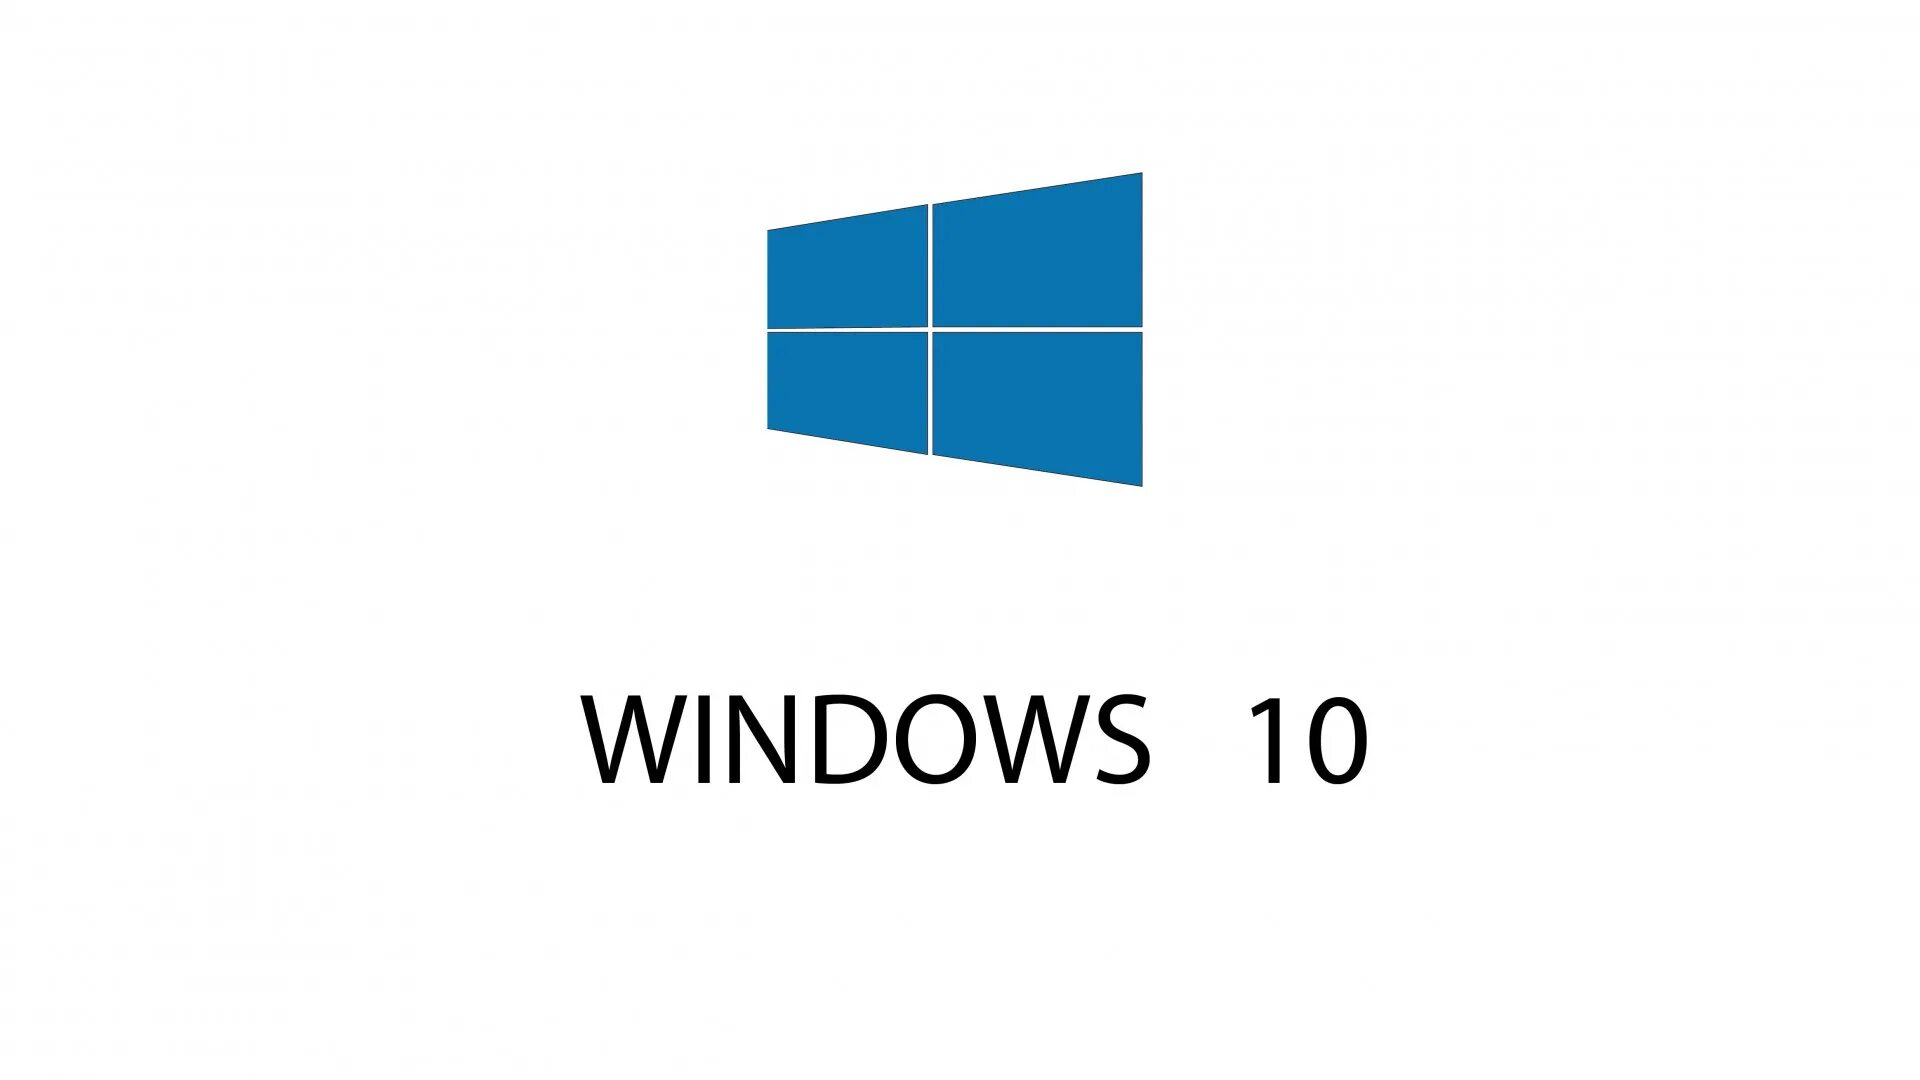 Load windows 10. Виндовс 10 лого. Логотип Windows. Windows 10 обложка. Значок Windows.